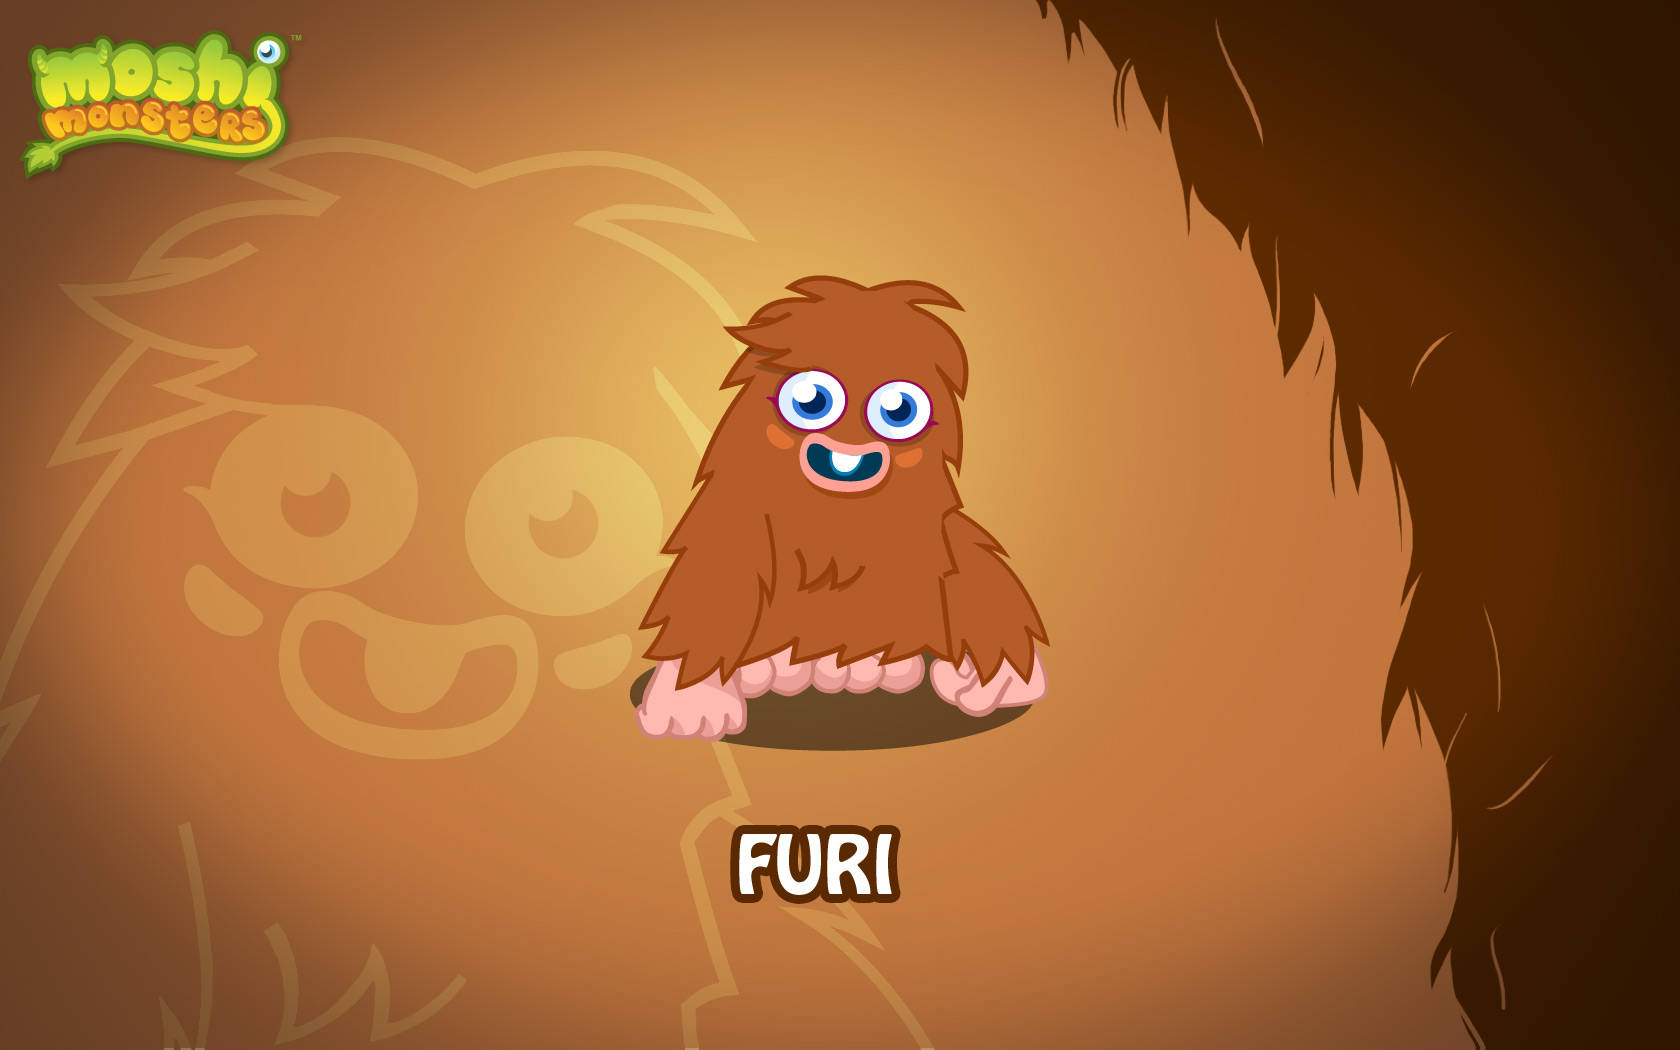 Caption: Furry Fun with Moshi Monster's Furi Wallpaper